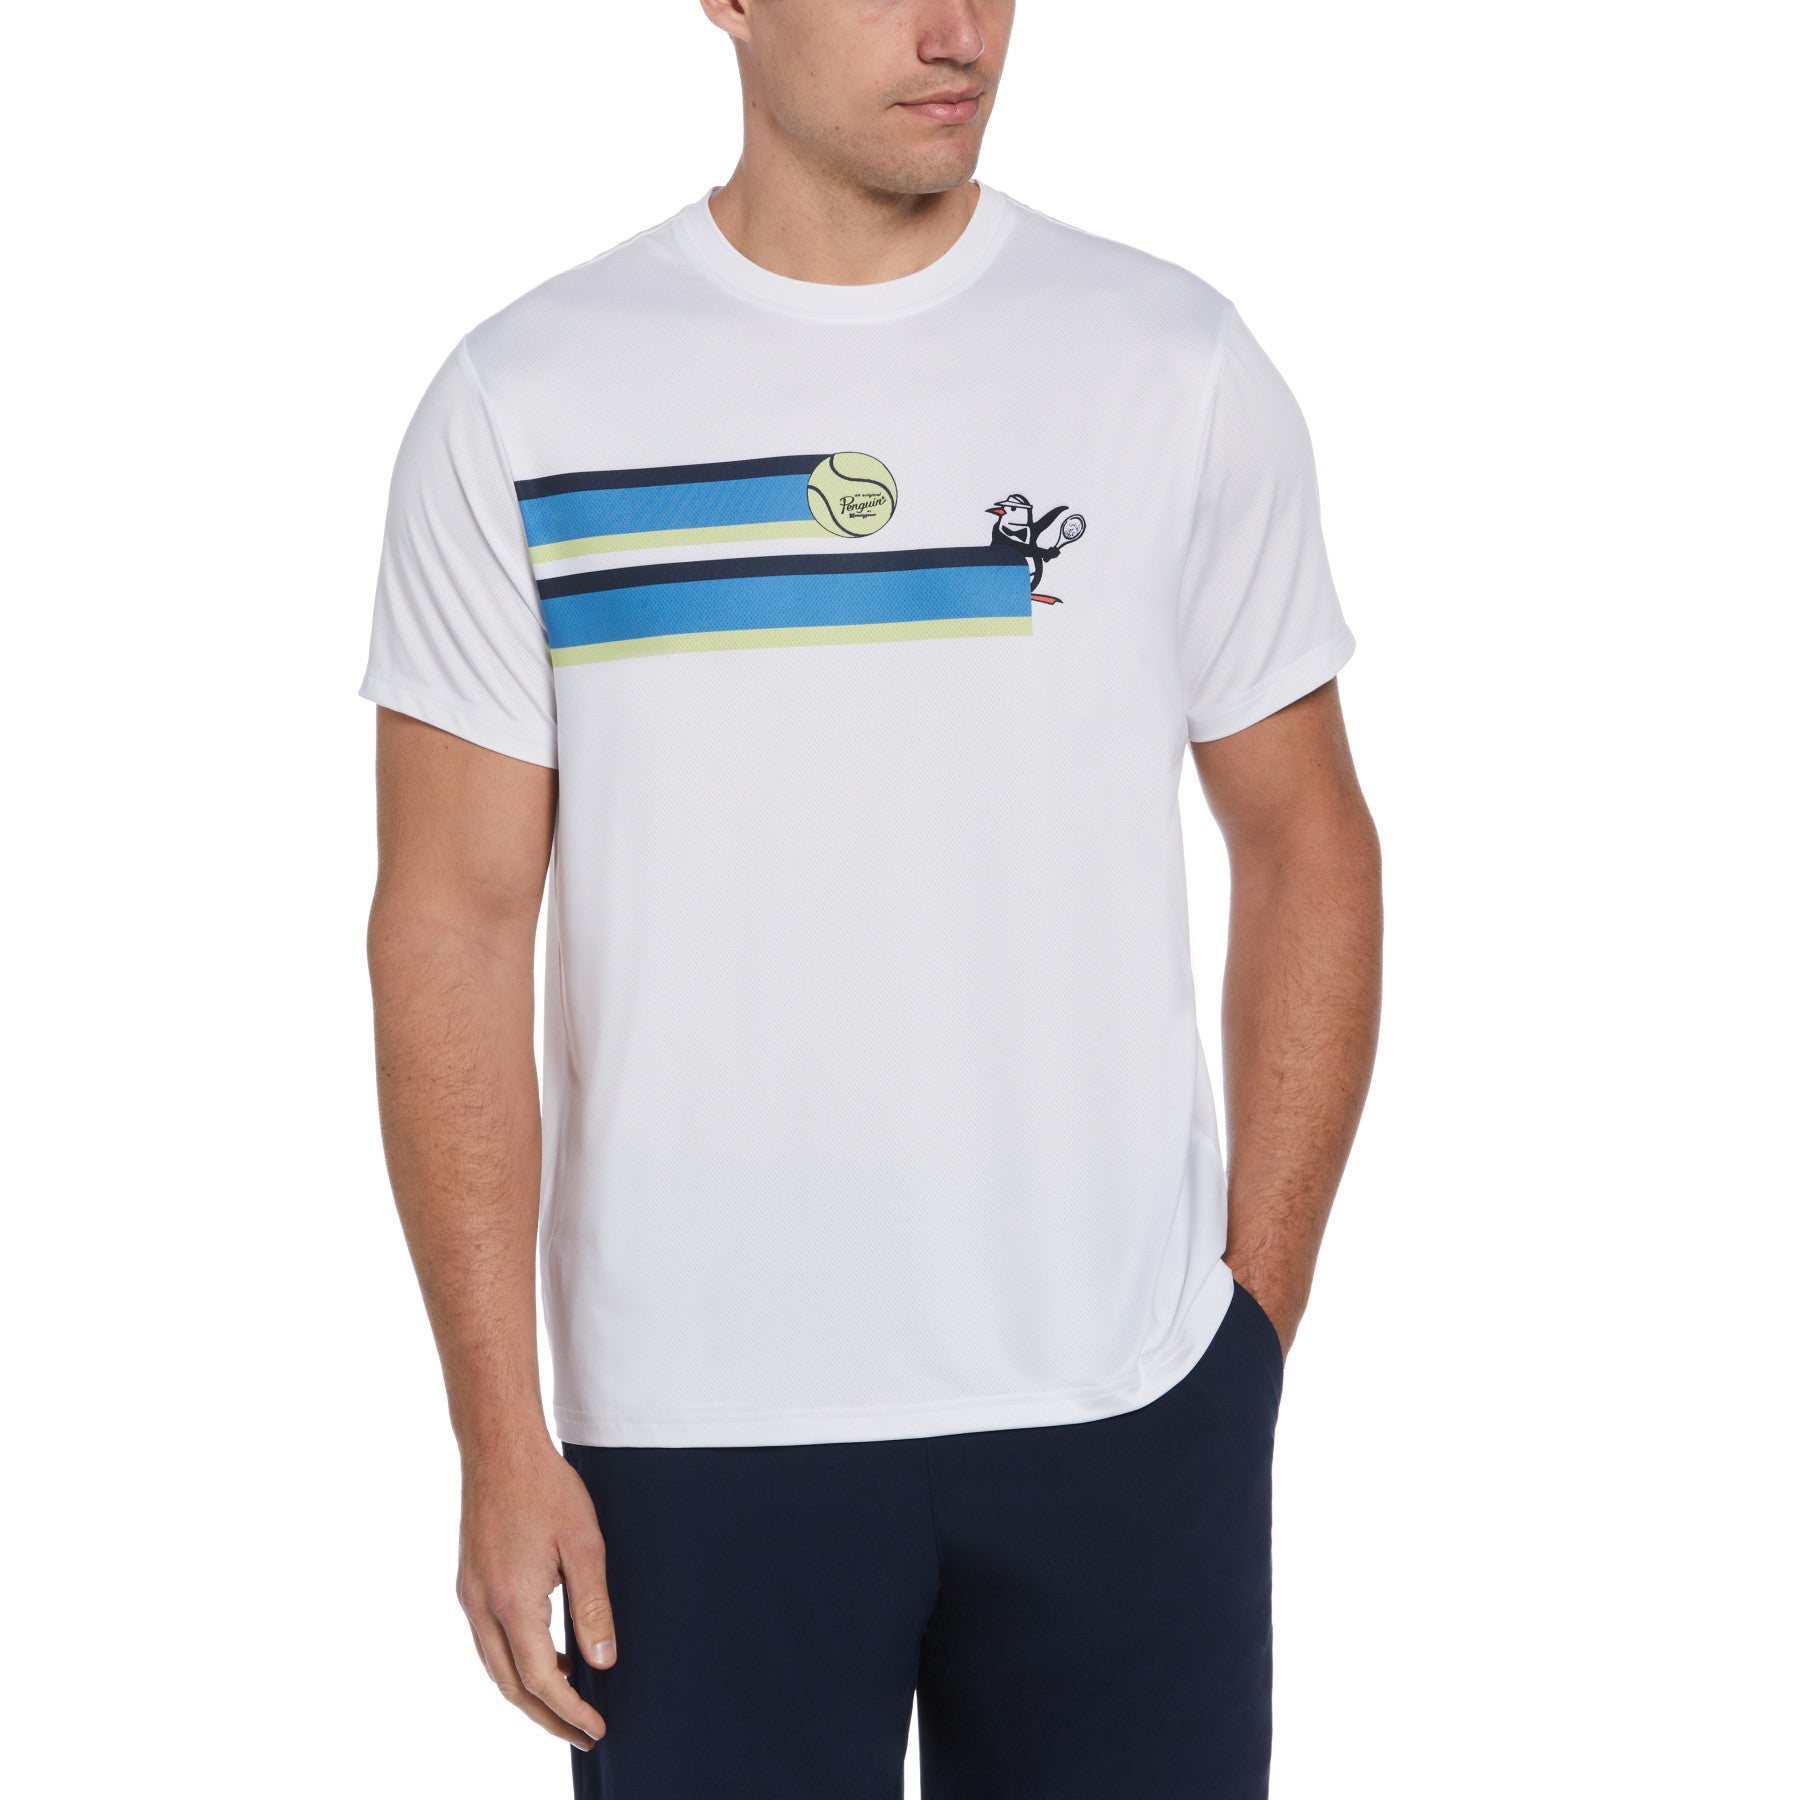 View 80S Stripe Graphic Tennis TShirt In Bright White information